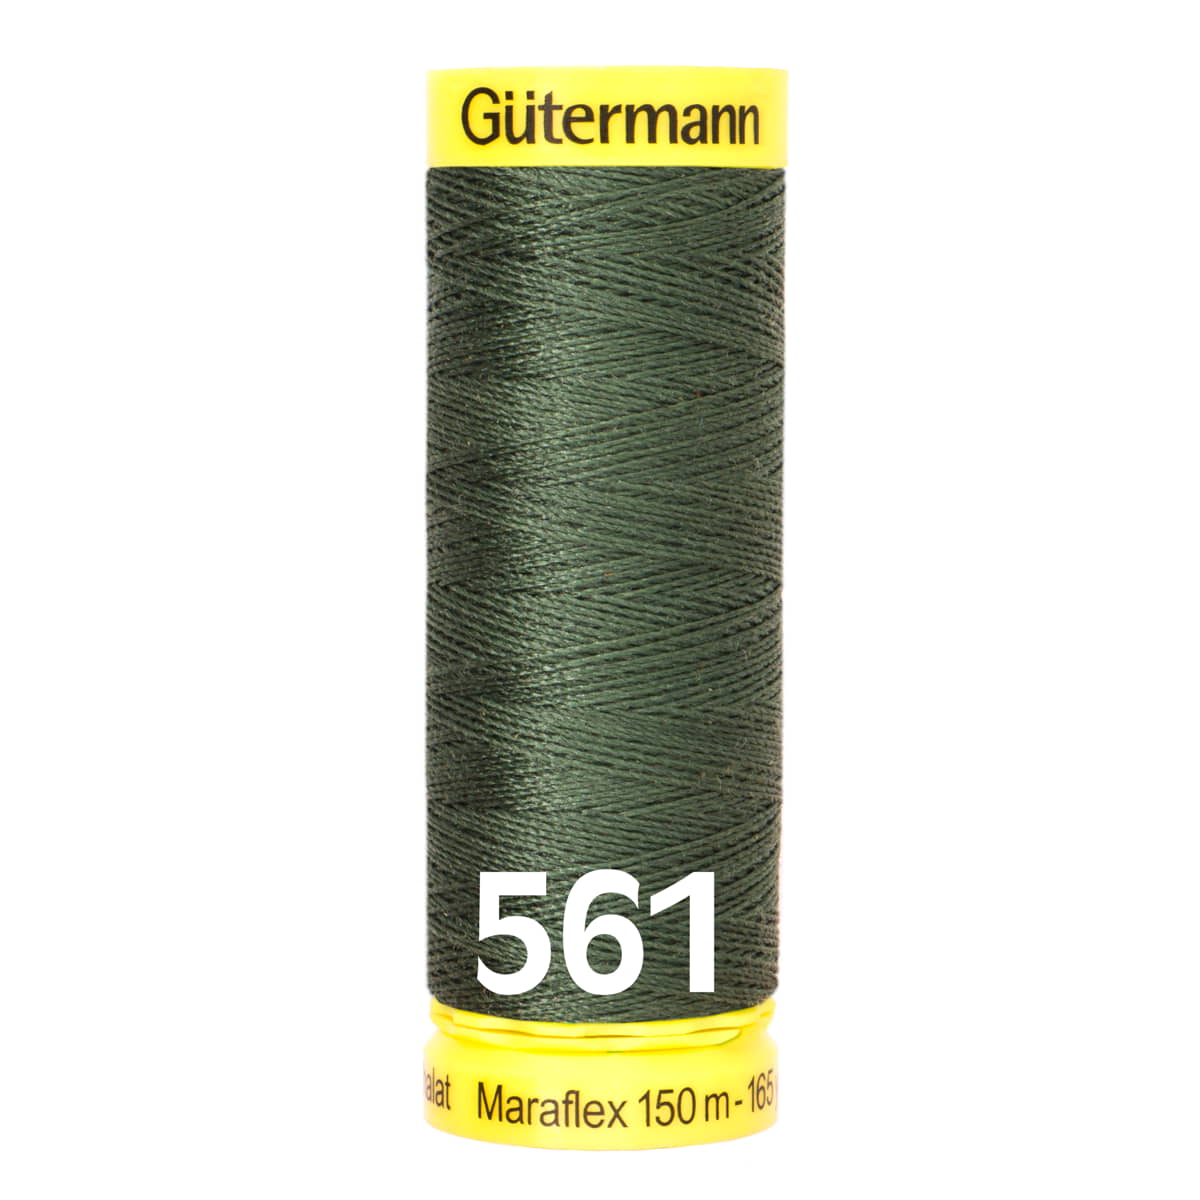 Gütermann MaraFlex 150m - 561 leger groen GUTERMANN-MARAFLEX-150-561 4029394995854 - Fourniturenkraam.nl